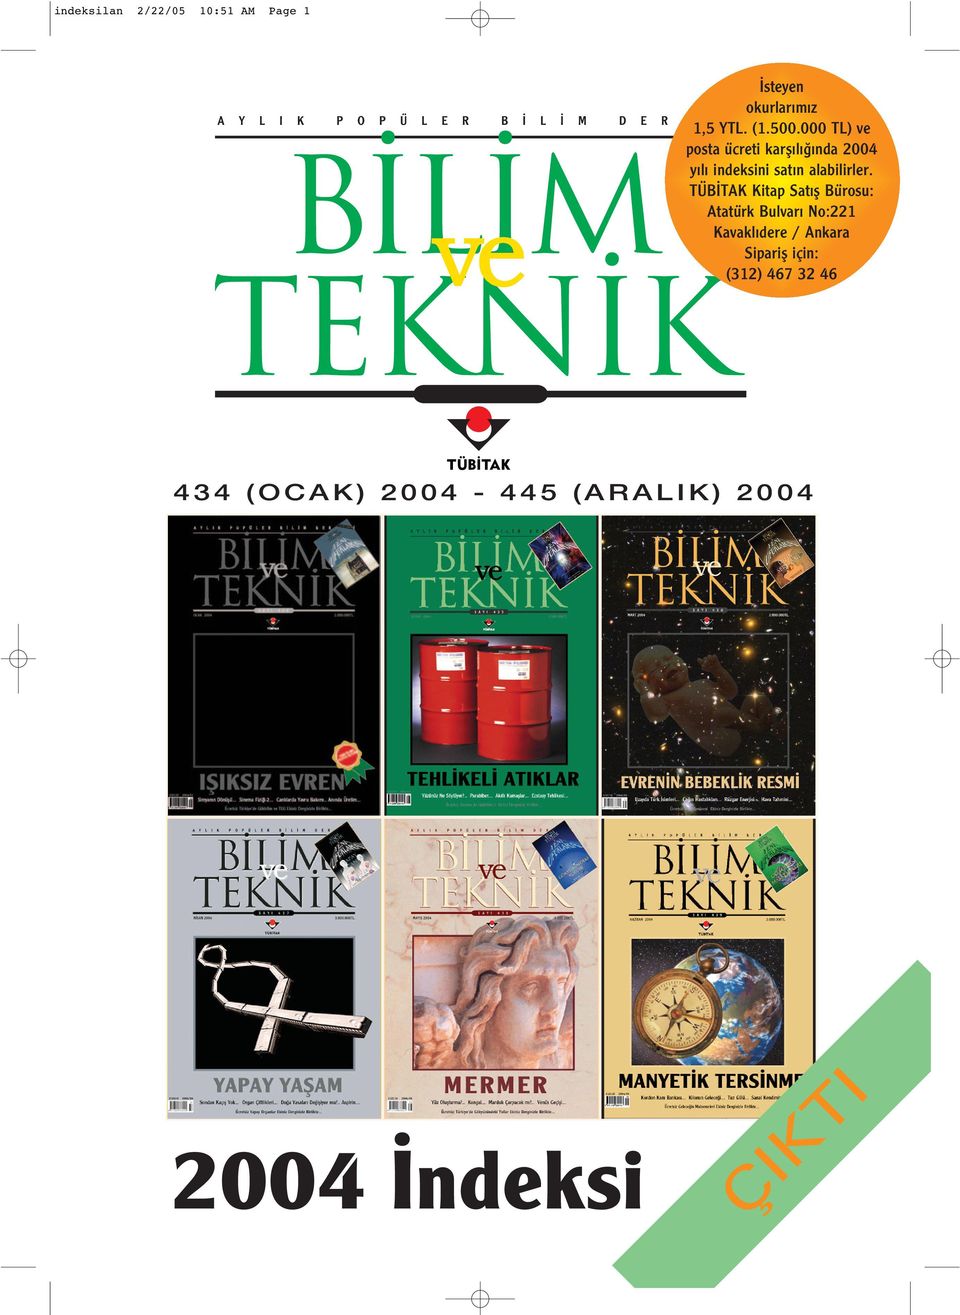 TÜB TAK Kitap Sat fl Bürosu: Atatürk Bulvar No:221 Kavakl dere / Ankara